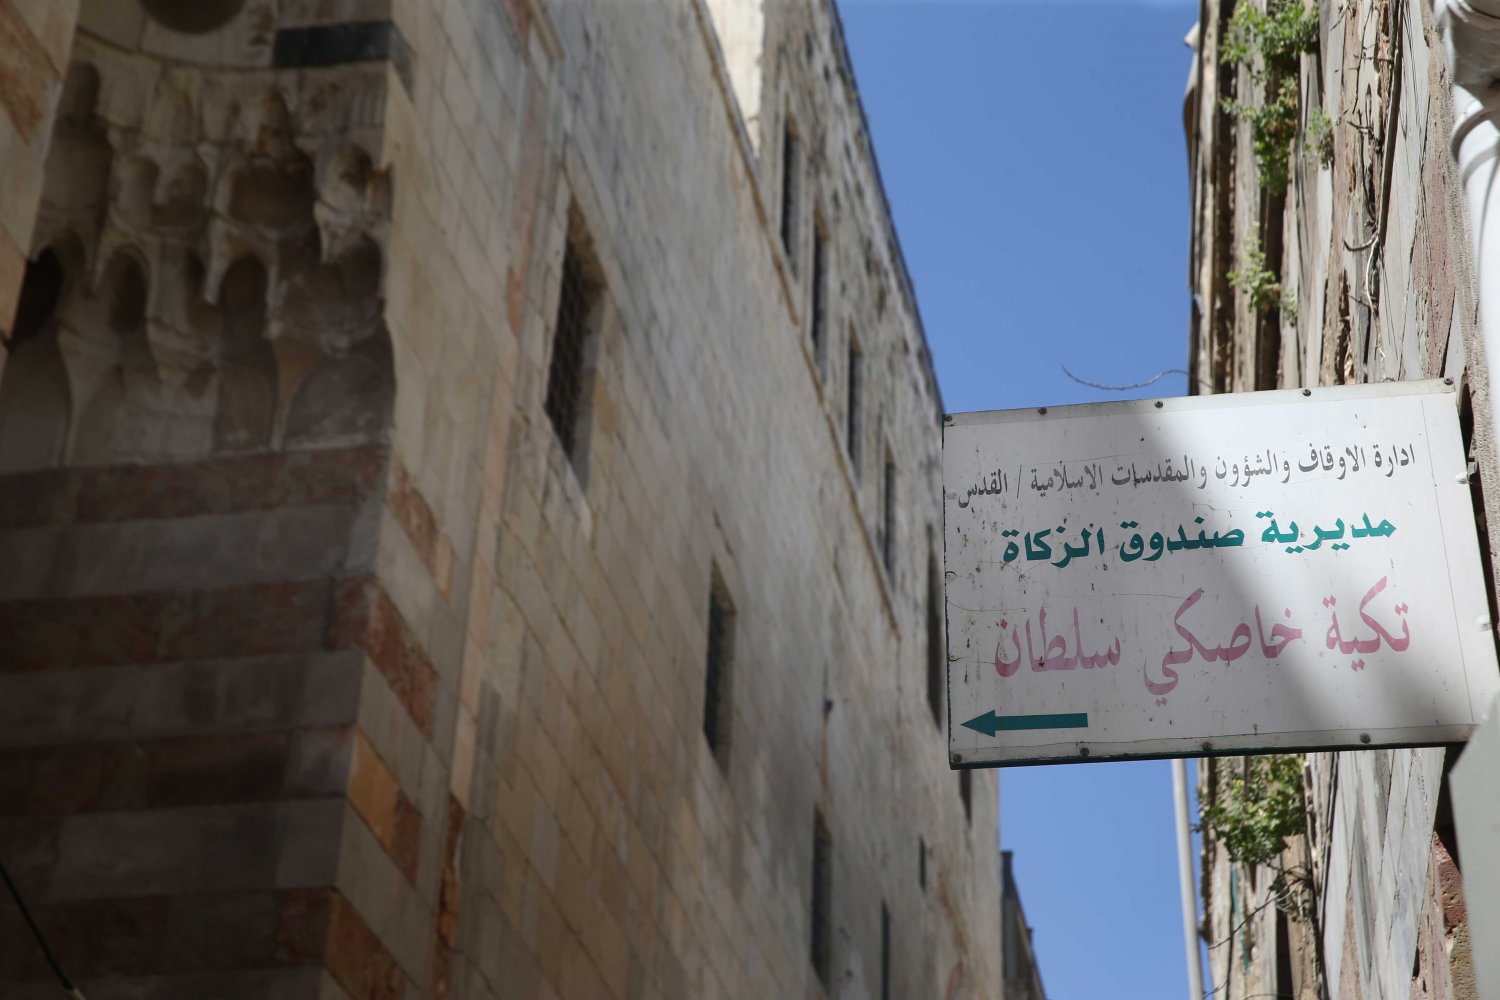 A sign in Arabic points the way to the Jerusalem community kitchen, Takiyya Khaski Sultan